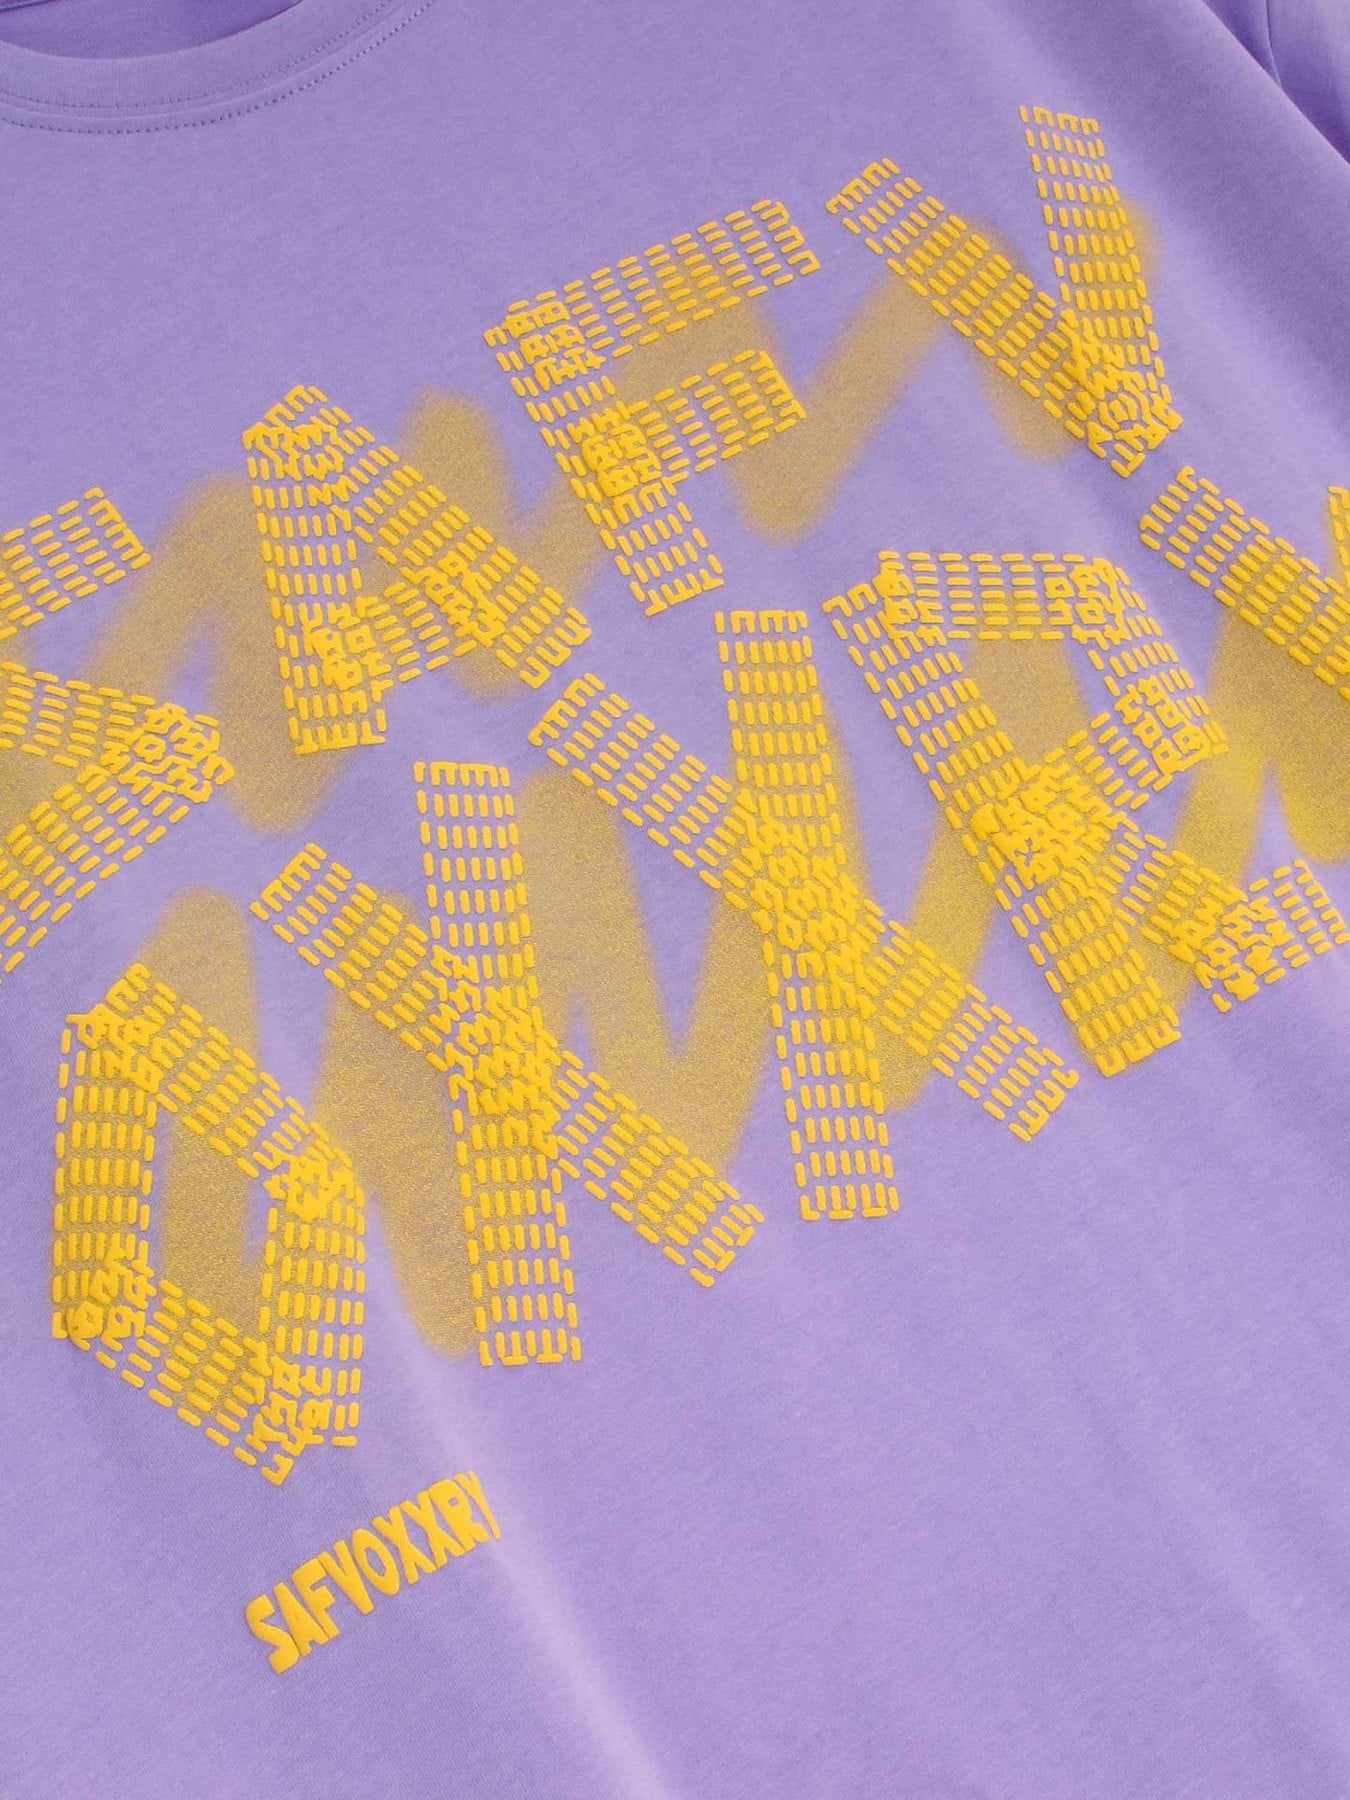 Thesupermade Creative Alphabet Printed T-Shirt